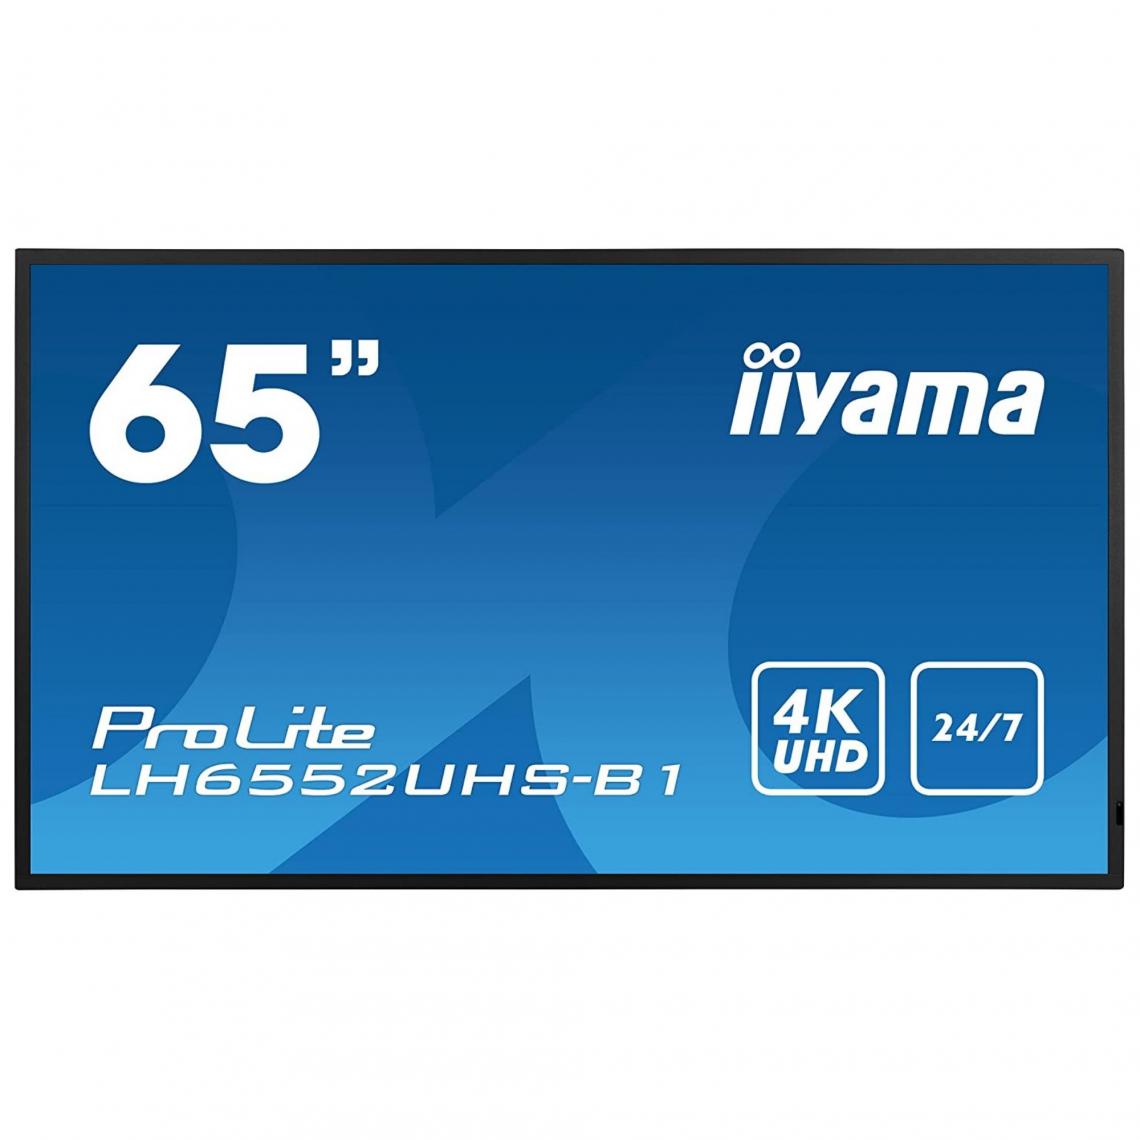 Iiyama - IIYAMA LFD 65" dalle IPS 24/7 3840x2160 DVI VGA 3xHDMI 2xHaut-parleurs DisplayPort 2xUSB 500cd/m² Paysage/port 8ms MediaPlayer VESA 400x400 LH6552UHS-B1 - Moniteur PC